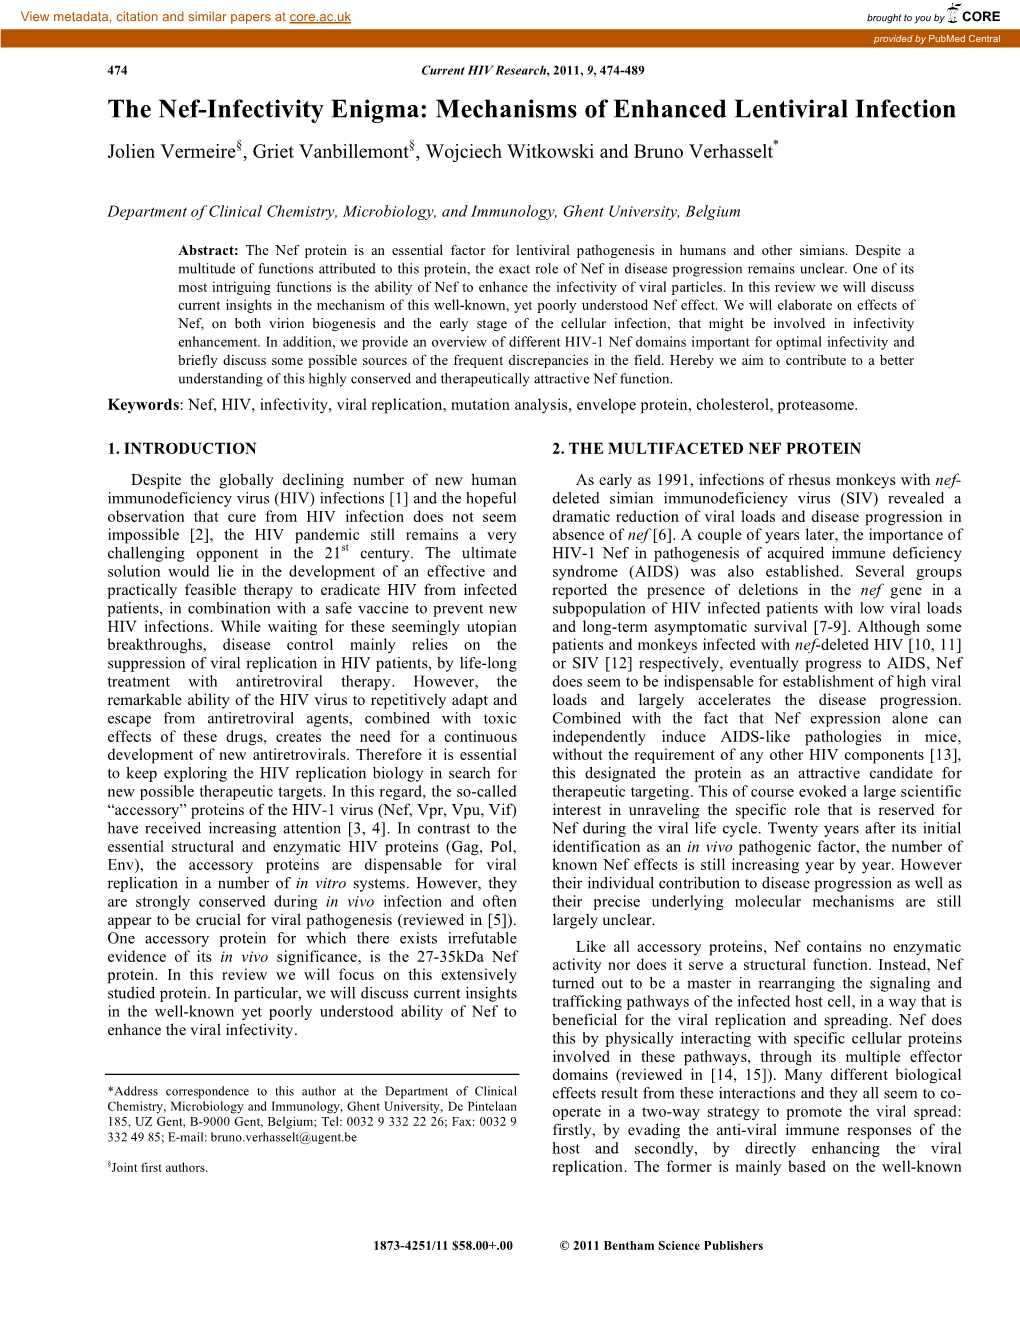 The Nef-Infectivity Enigma: Mechanisms of Enhanced Lentiviral Infection Jolien Vermeire§, Griet Vanbillemont§, Wojciech Witkowski and Bruno Verhasselt*